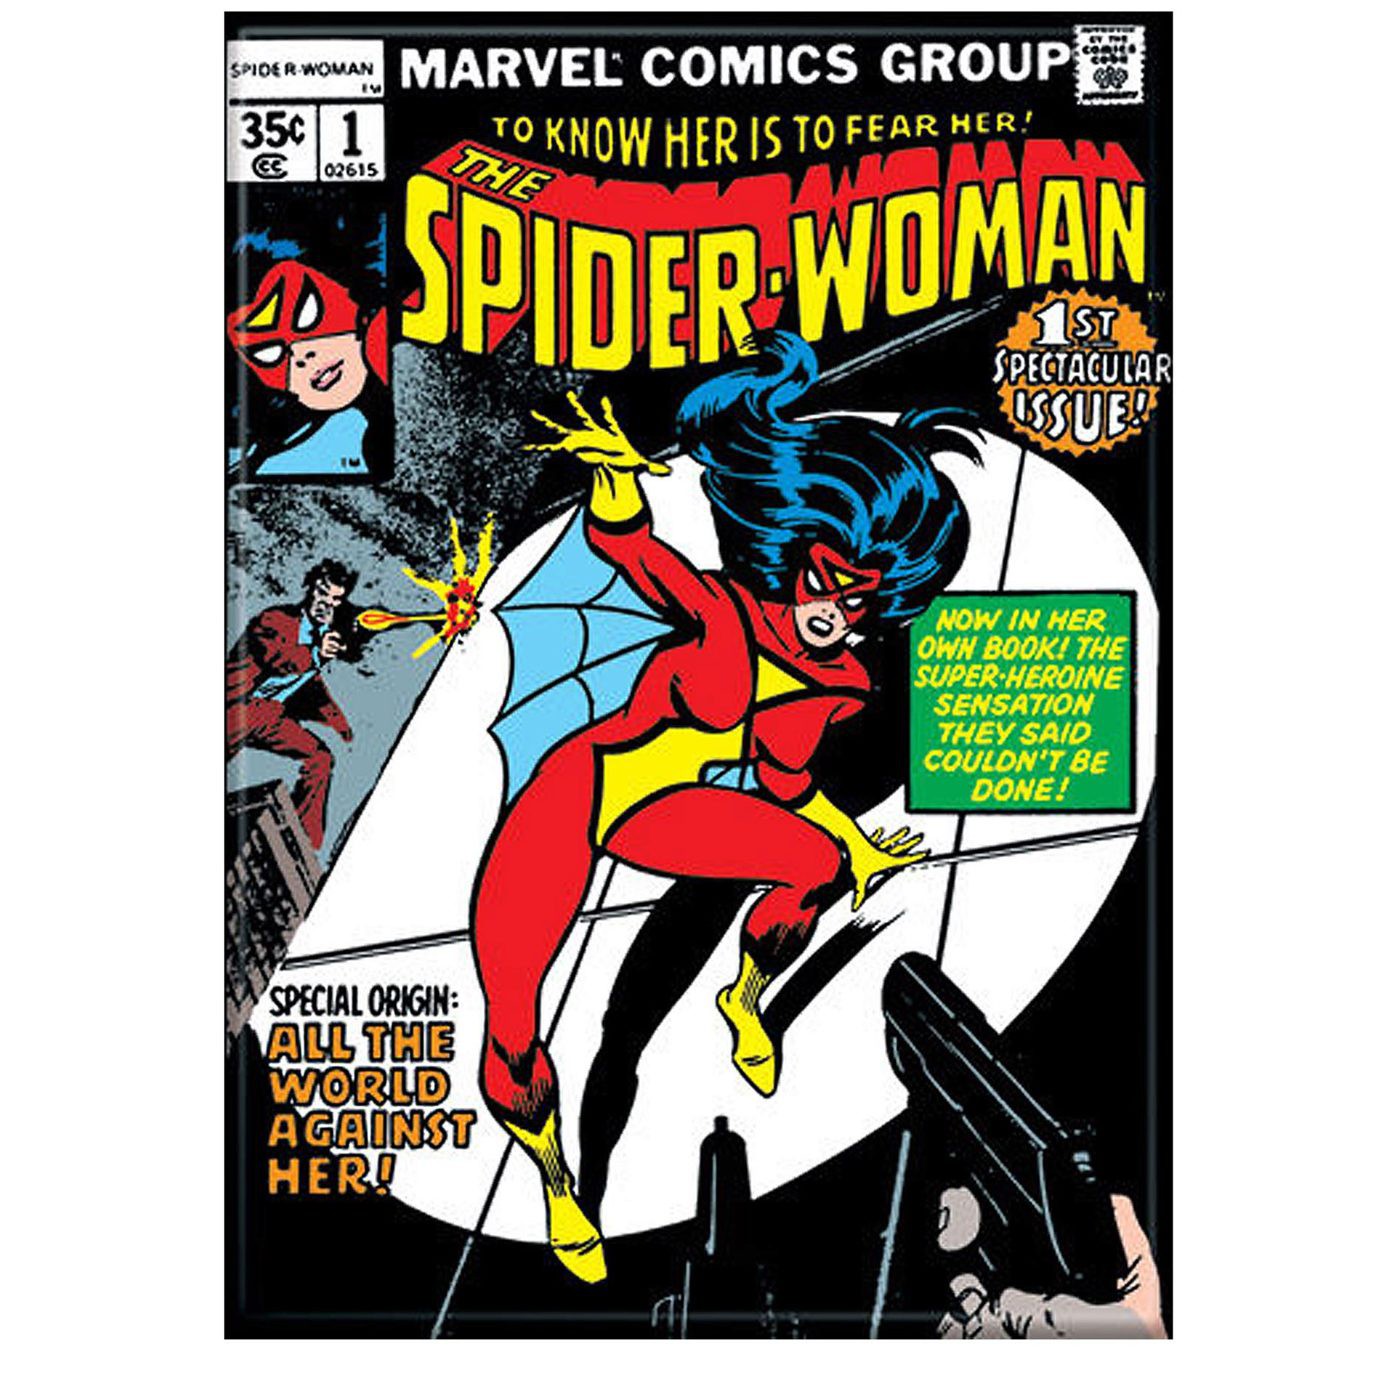 Spiderwoman #1 Cover Magnet